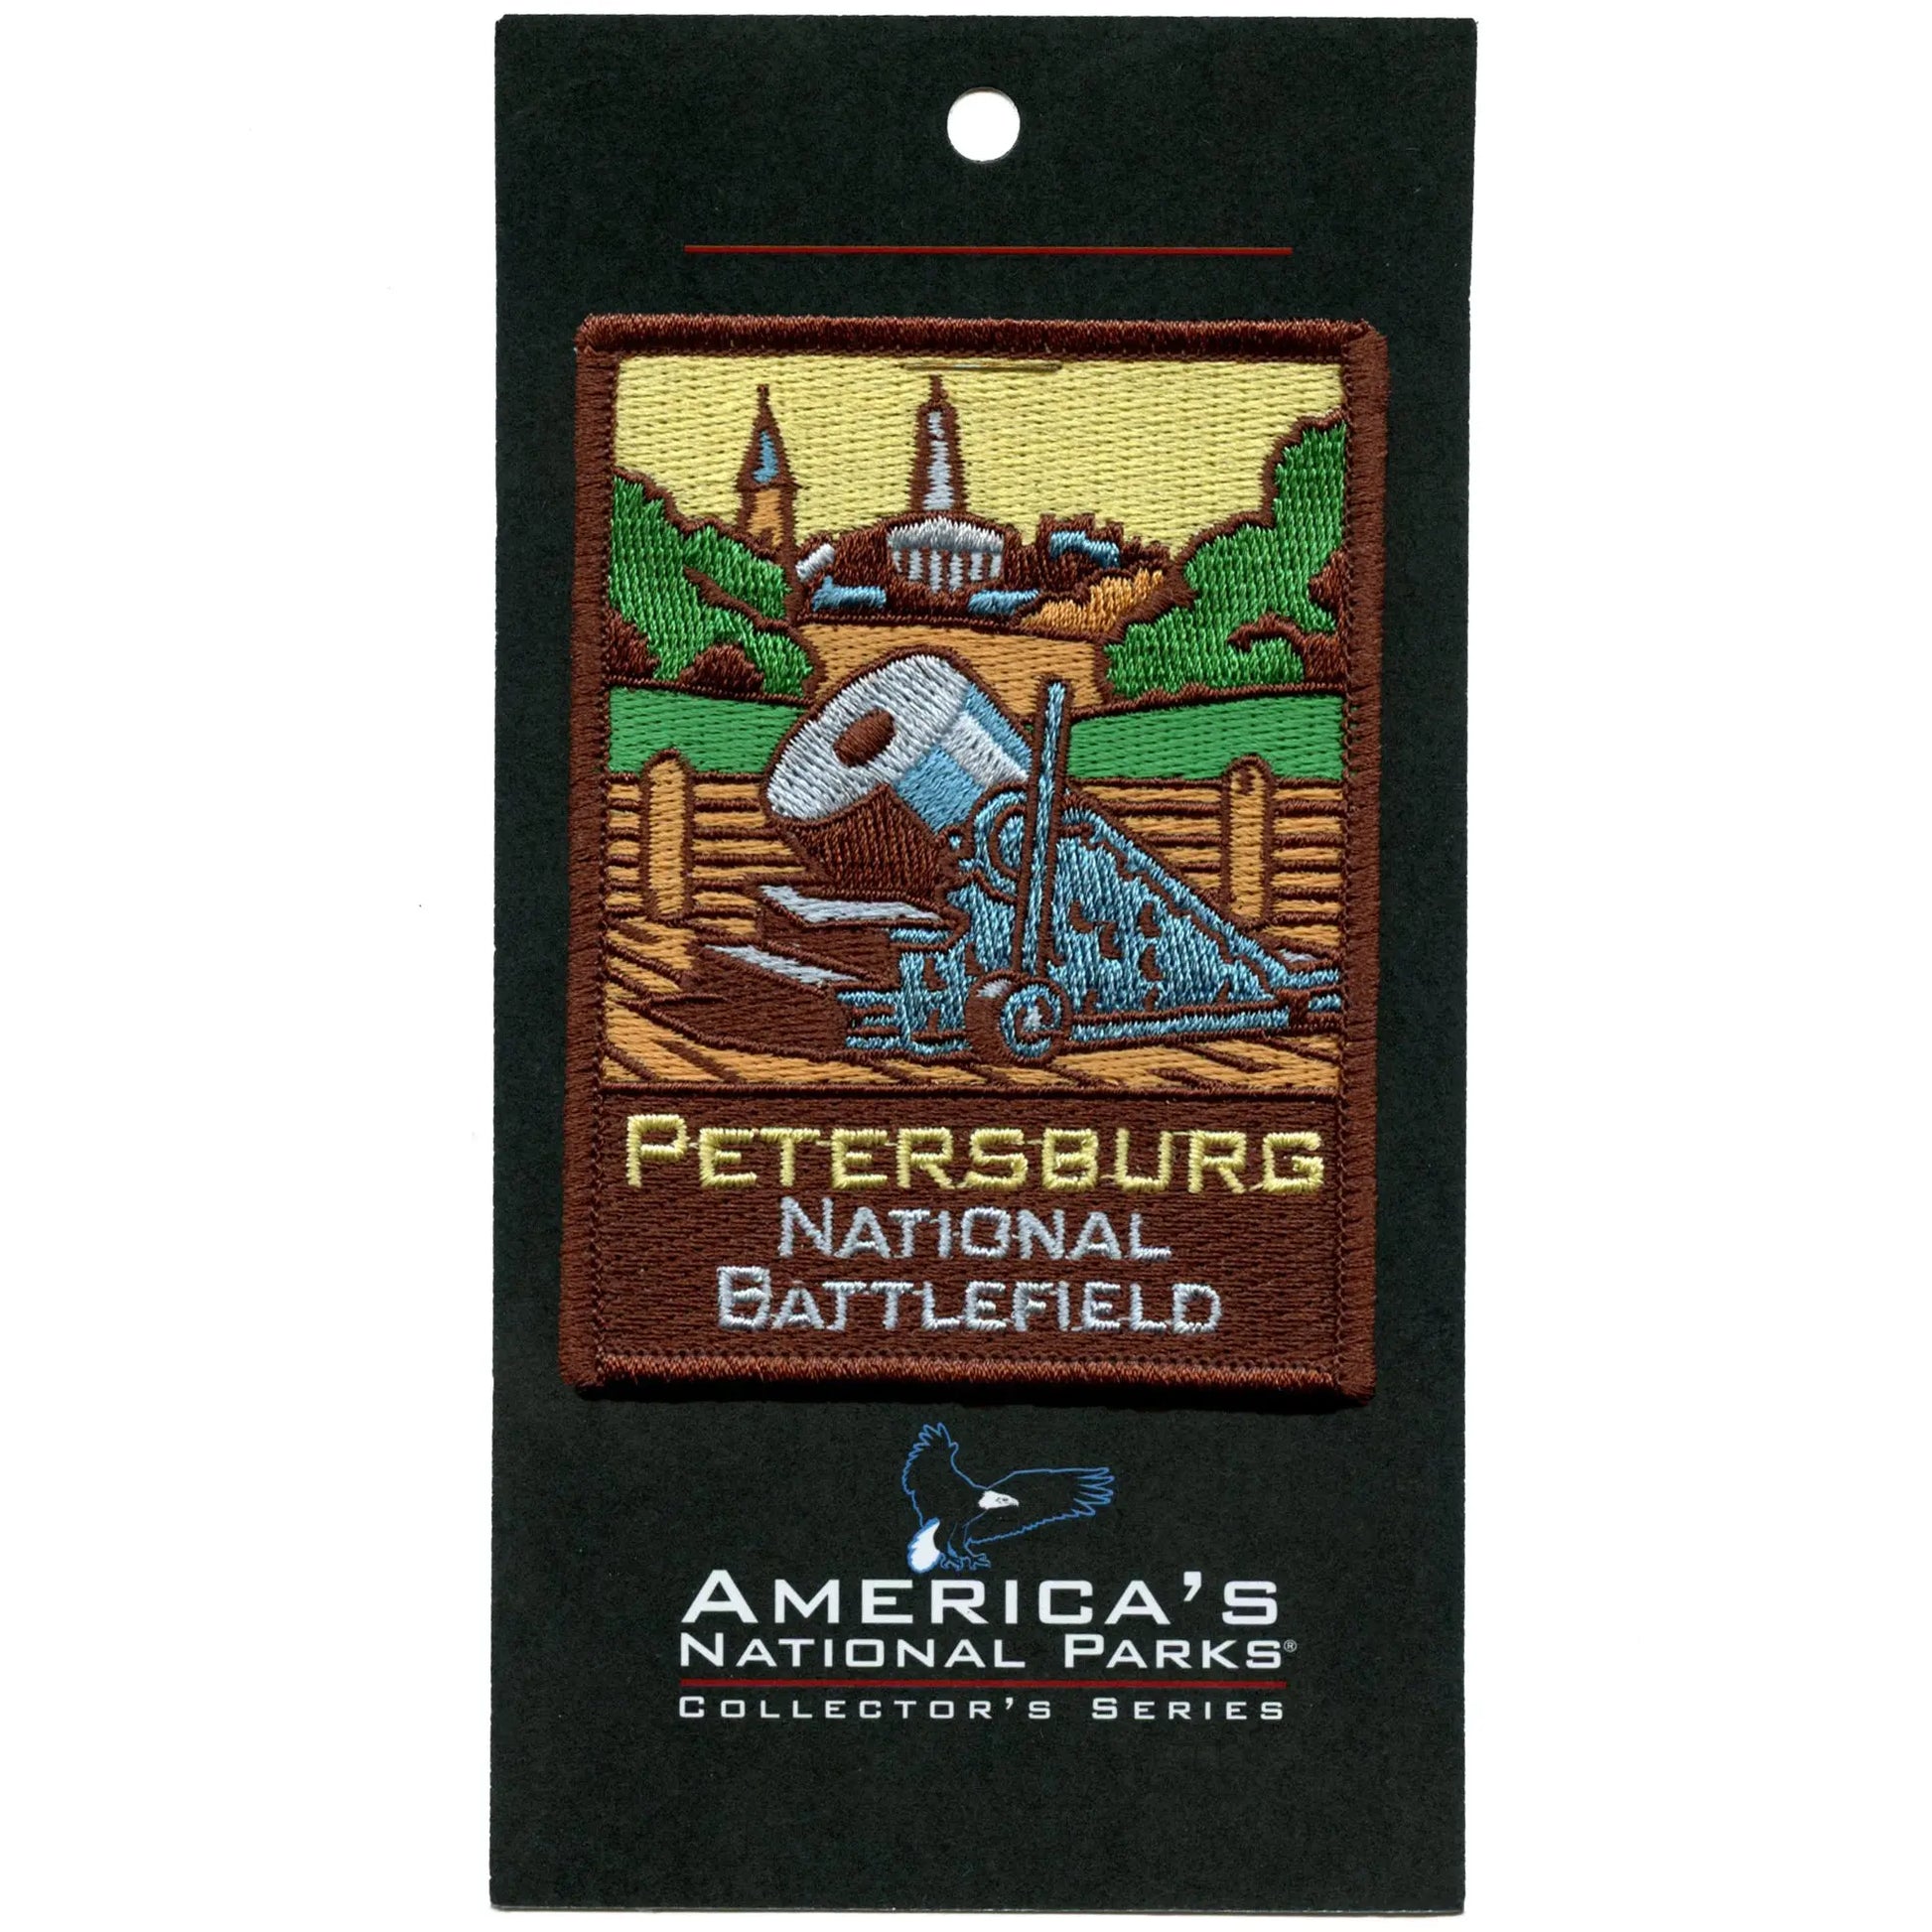 Petersburg National Battlefield Patch Petersburg Virginia Travel Embroidered Iron On